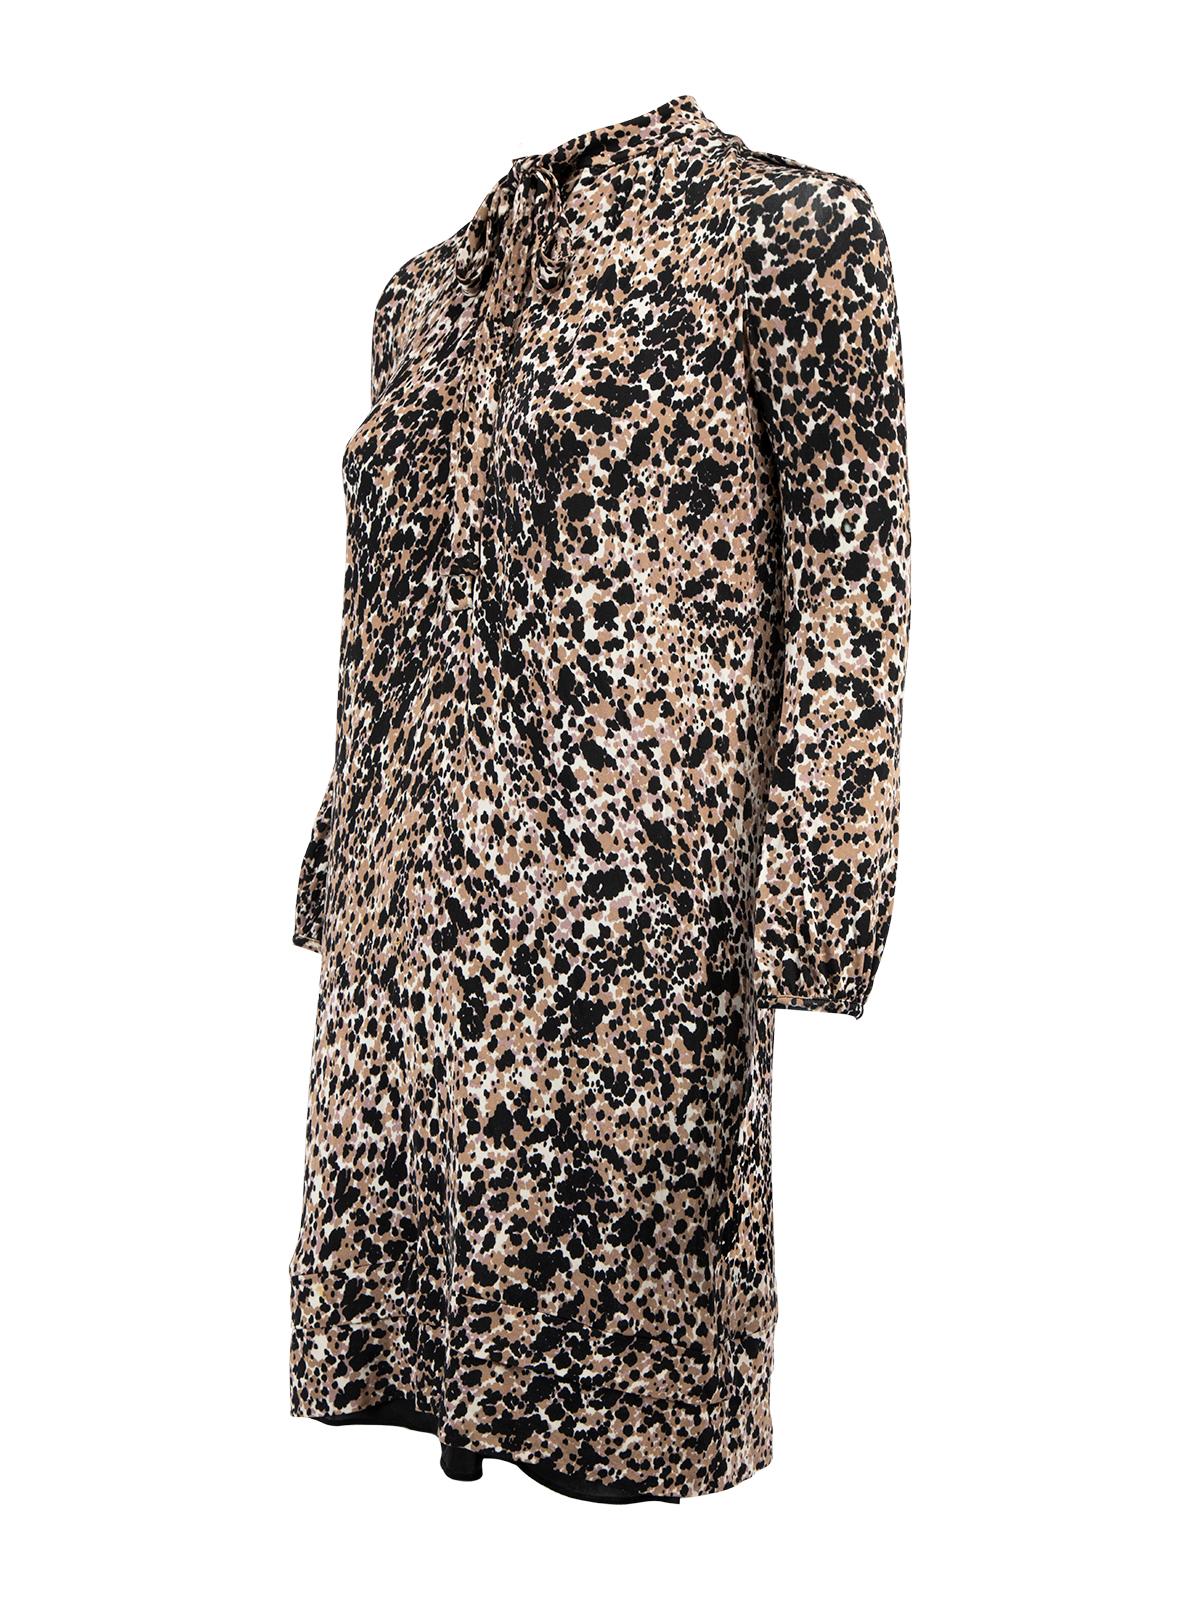 Pre-Loved Burberry Women's Leopard Print Patterned Dress For Sale 1